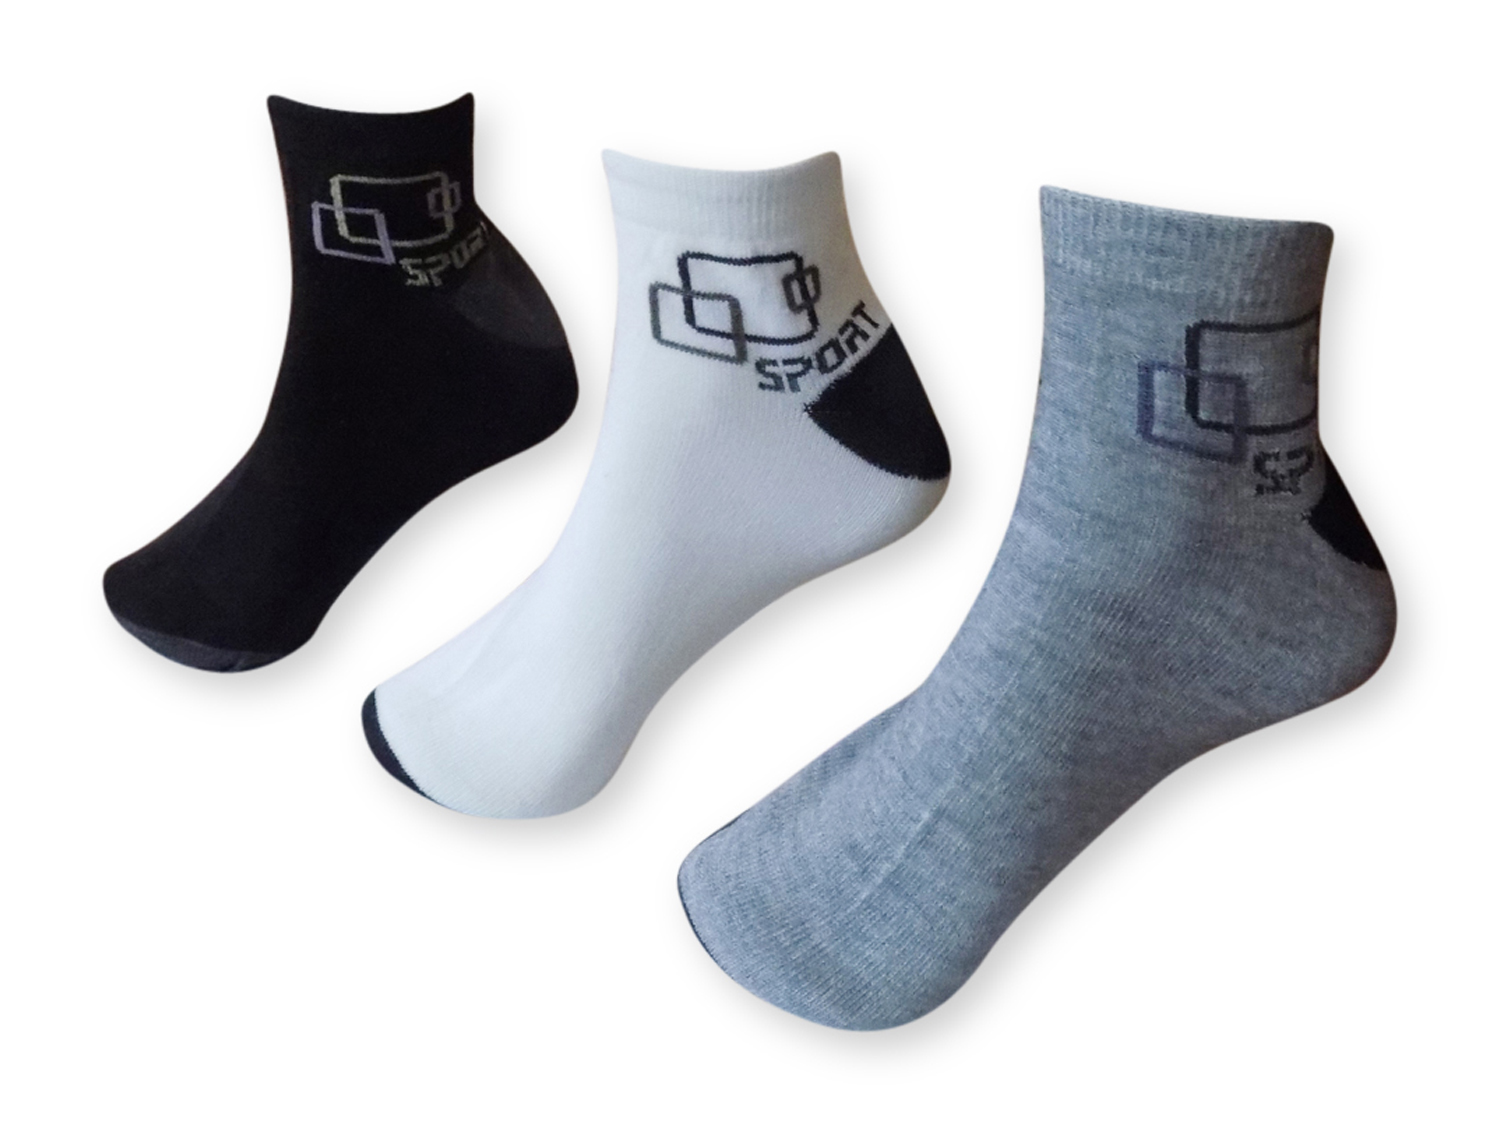 Buy Pair of 3 Men Cotton Ankle Socks, Fit , Comfort, Cotton Socks ...